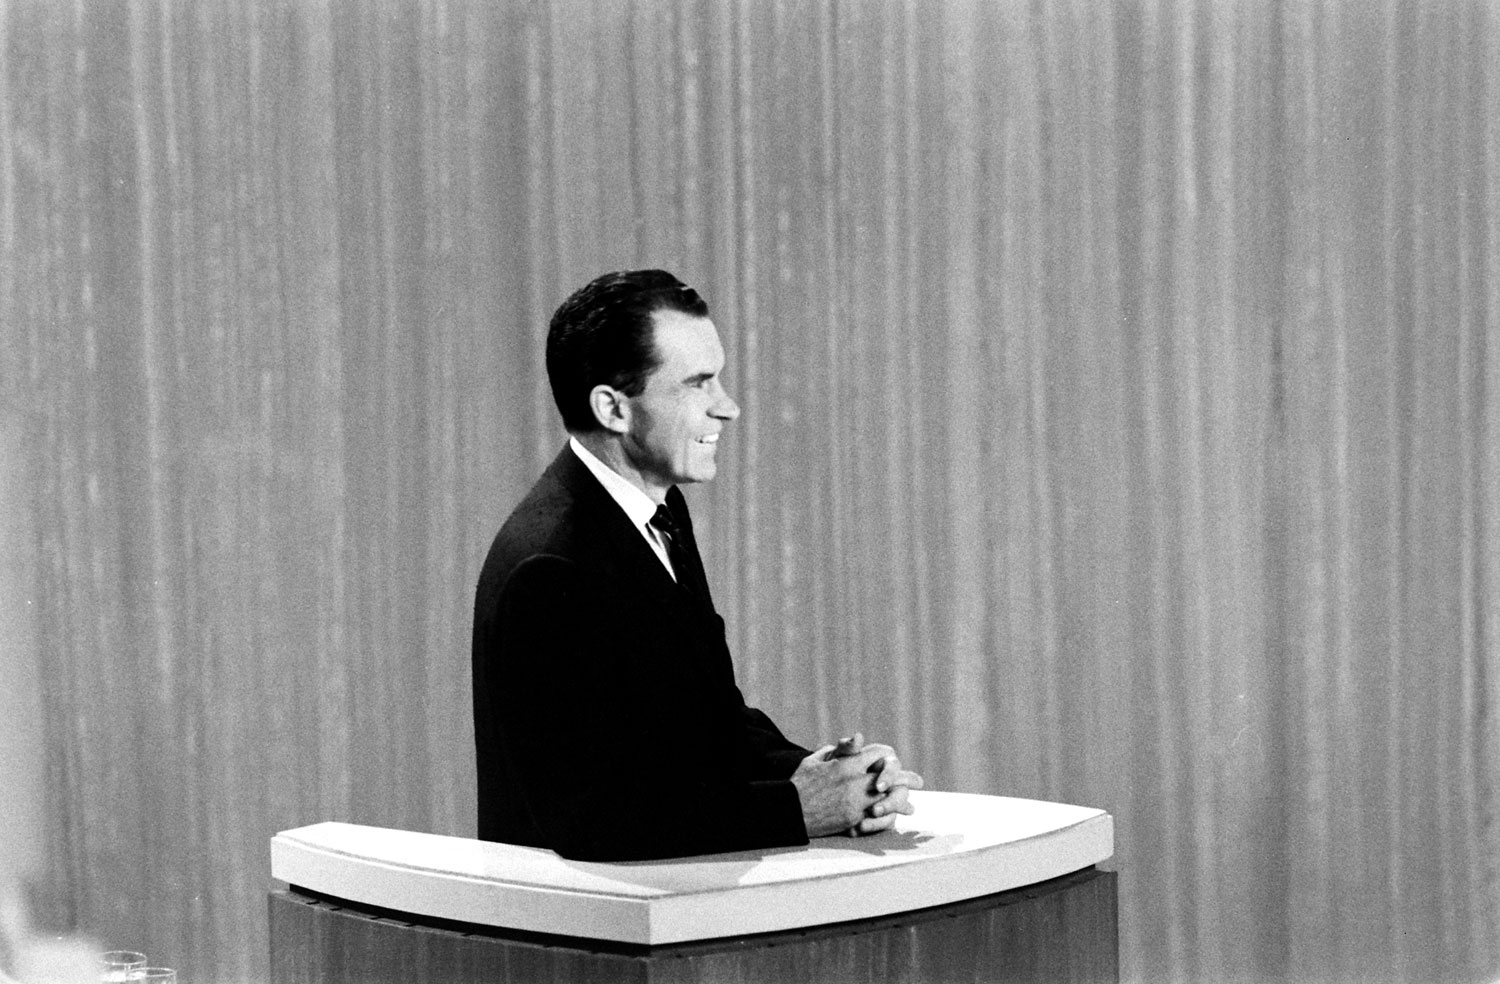 Richard Nixon during the Kennedy-Nixon debates, 1960.